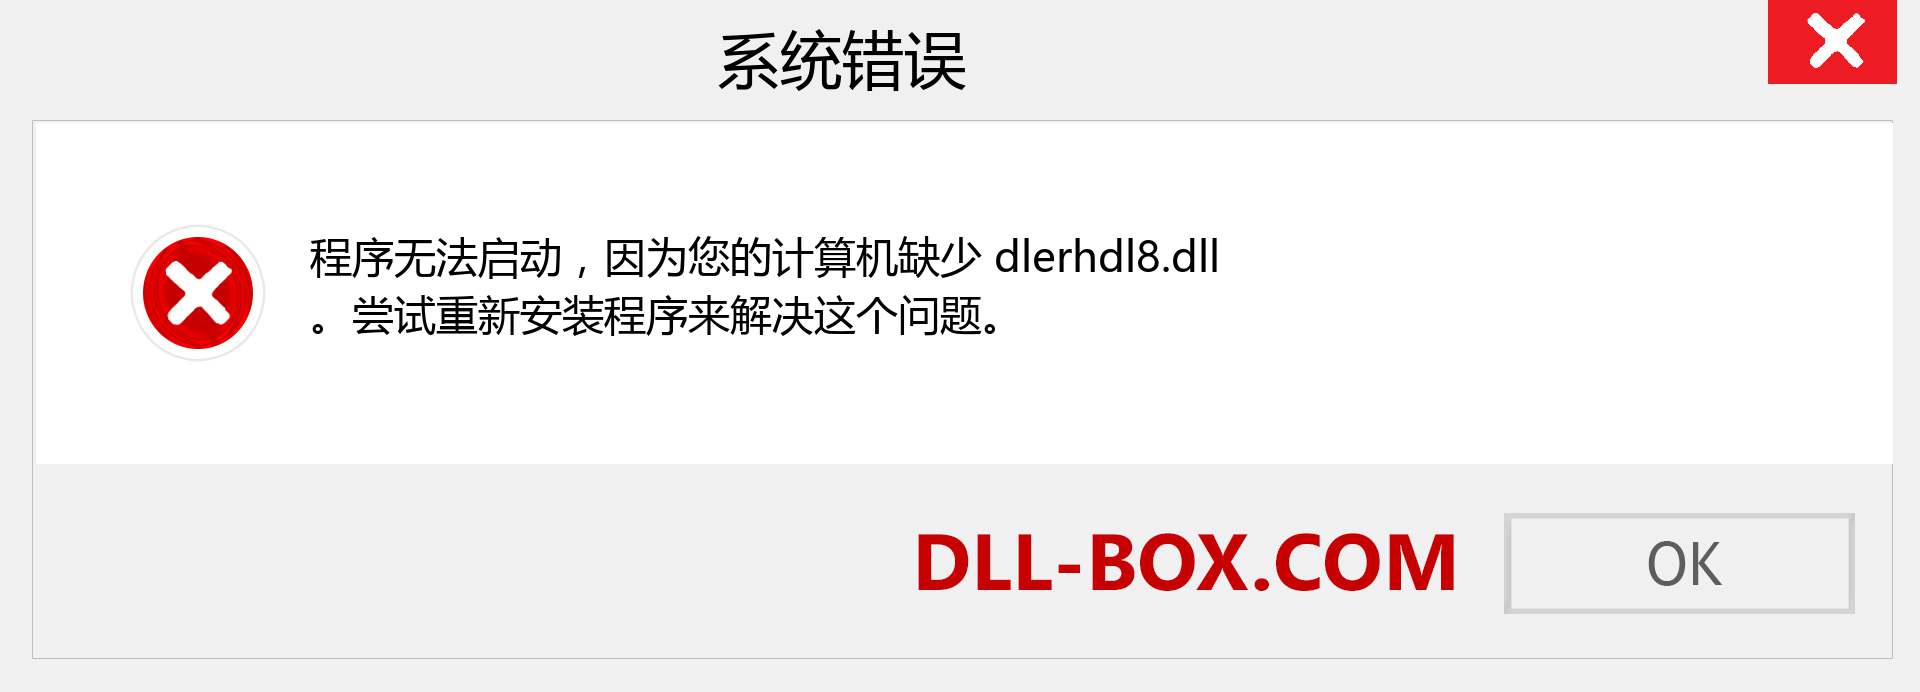 dlerhdl8.dll 文件丢失？。 适用于 Windows 7、8、10 的下载 - 修复 Windows、照片、图像上的 dlerhdl8 dll 丢失错误